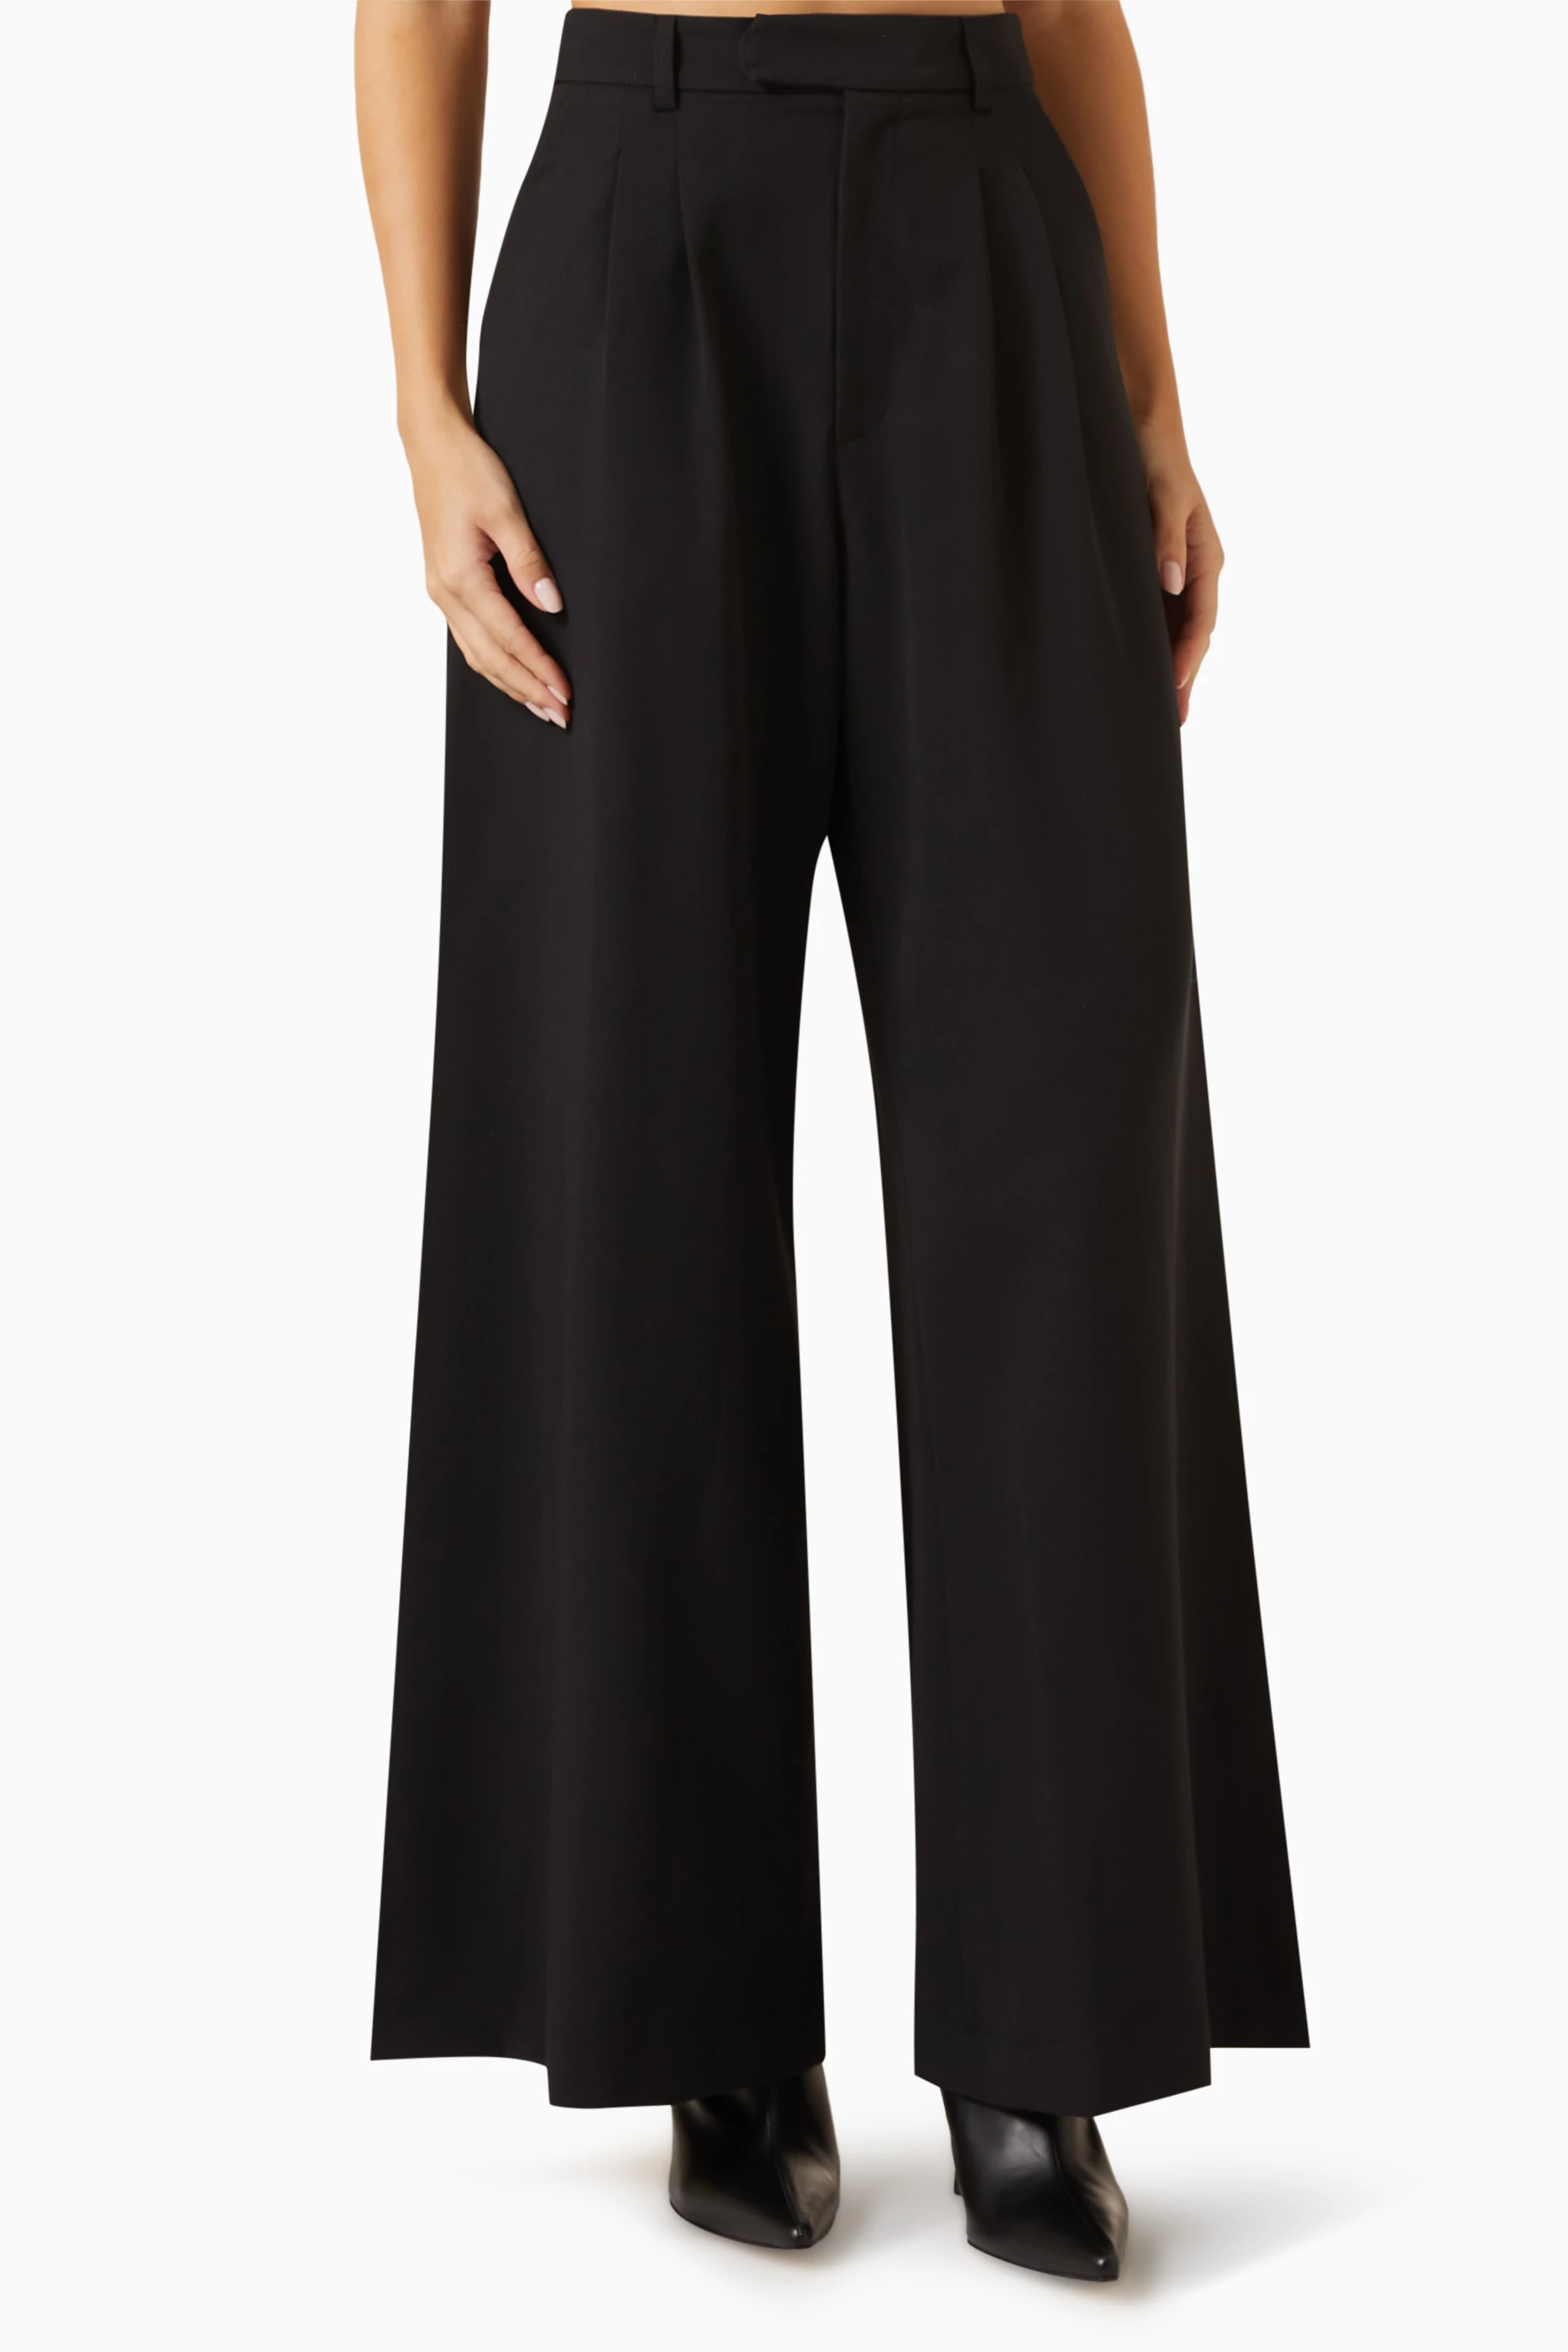 UBANT Women Fashion casual wide-leg pants dance trousers yoga pants loose  flared pants (Black, XXL) price in UAE,  UAE